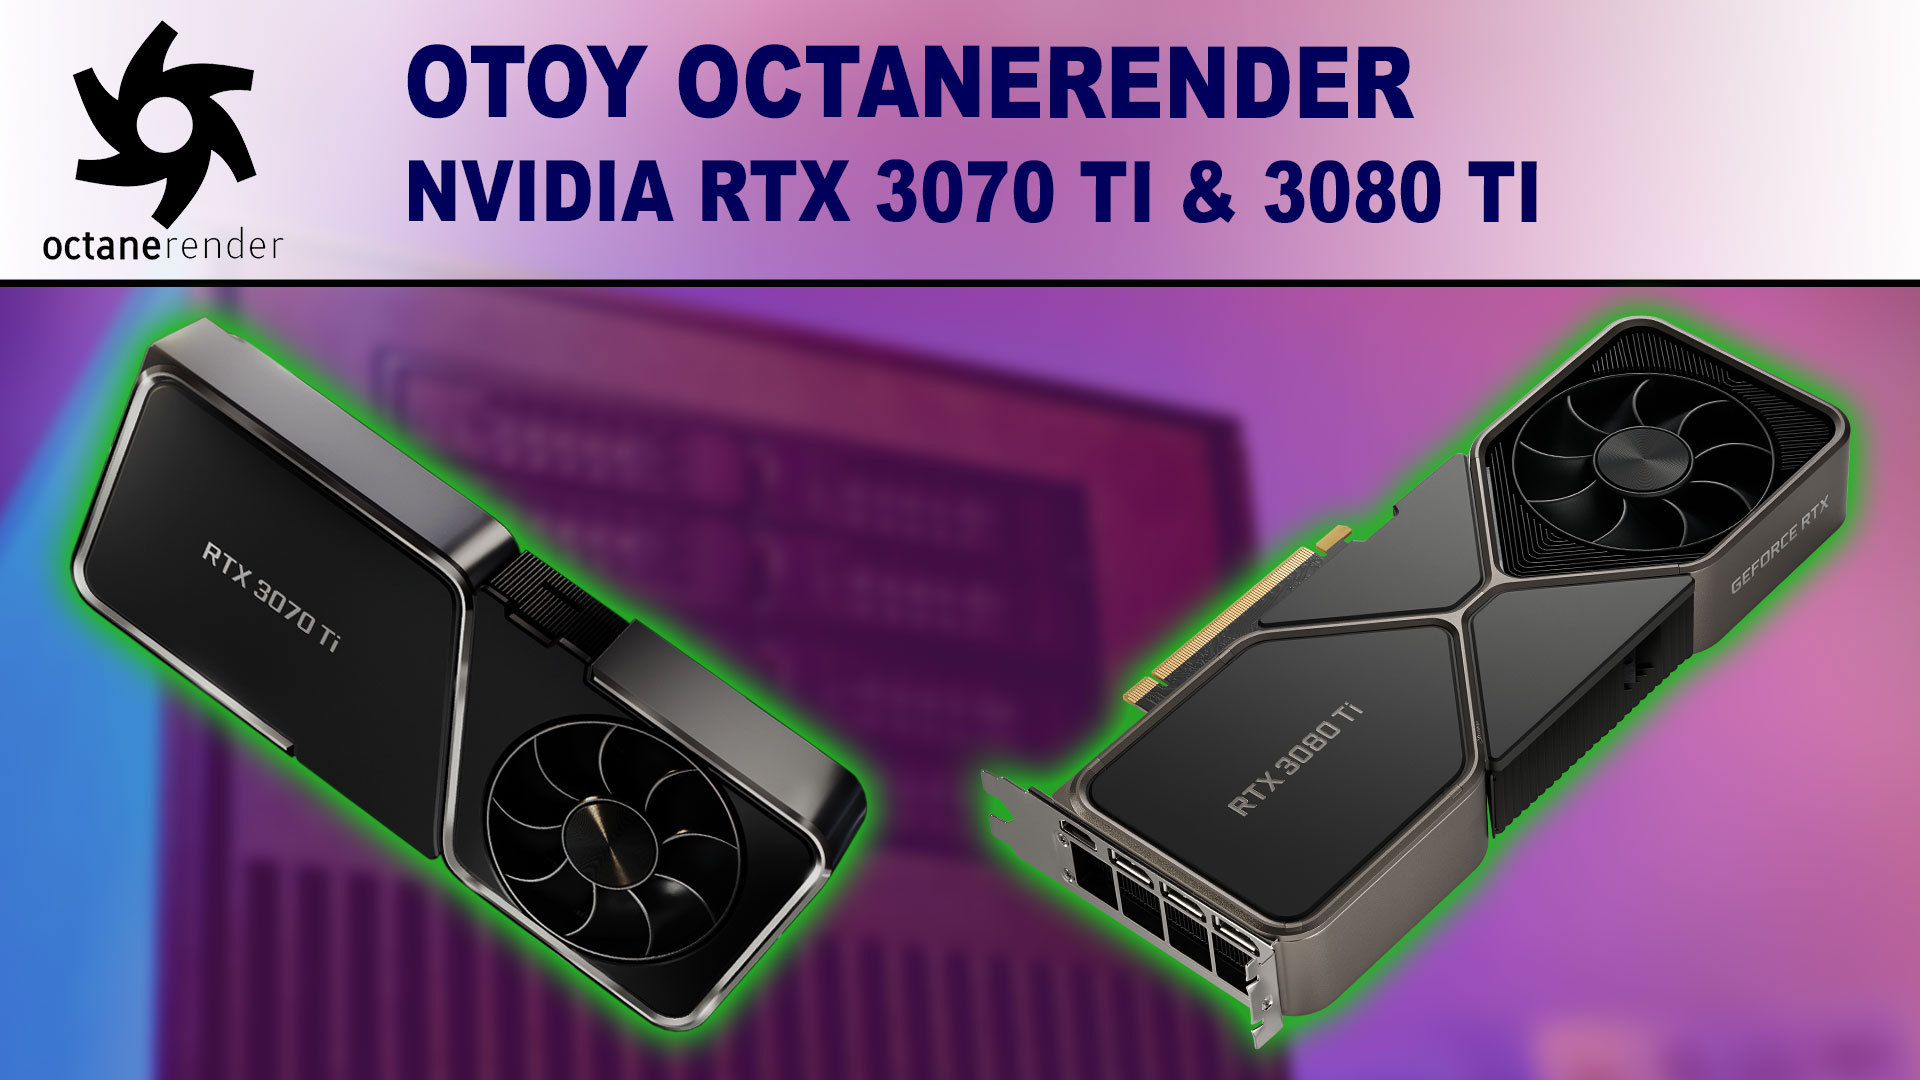 OctaneRender Performance Benchmark - NVIDIA GeForce RTX 3080 Ti 12GB